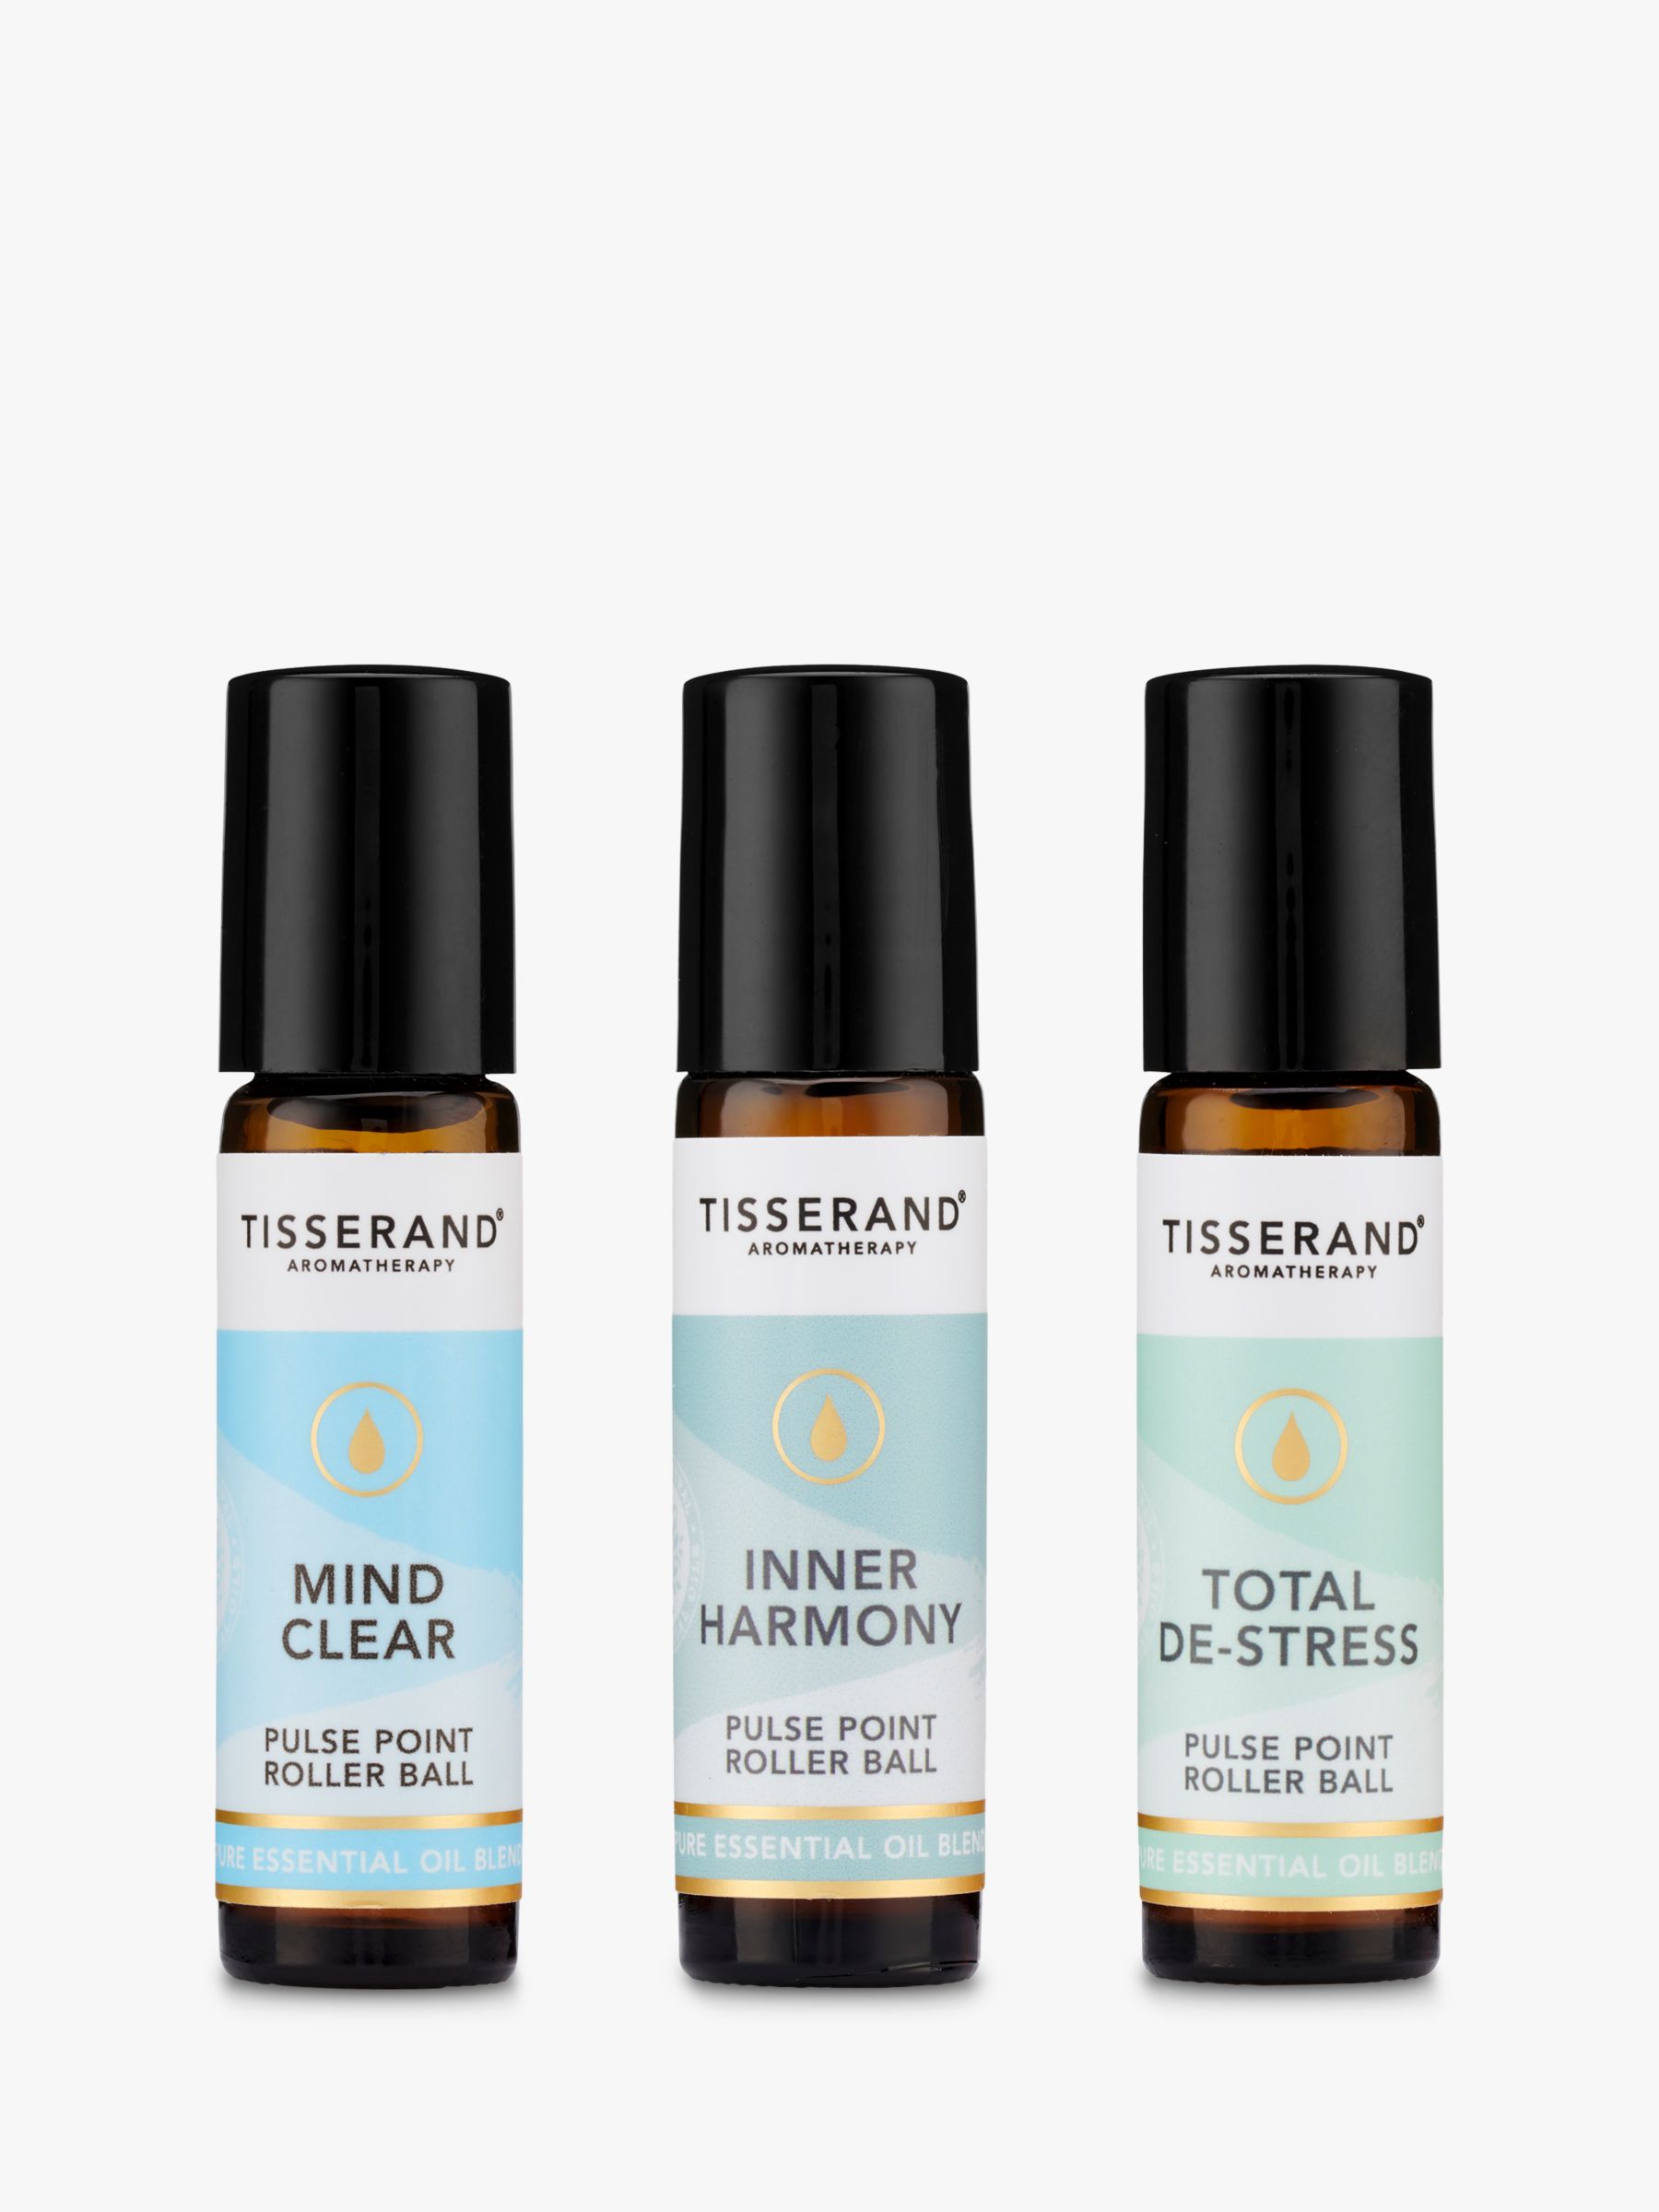 Tisserand Aromatherapy The Little Box of De-Stress Bodycare Gift Set 6